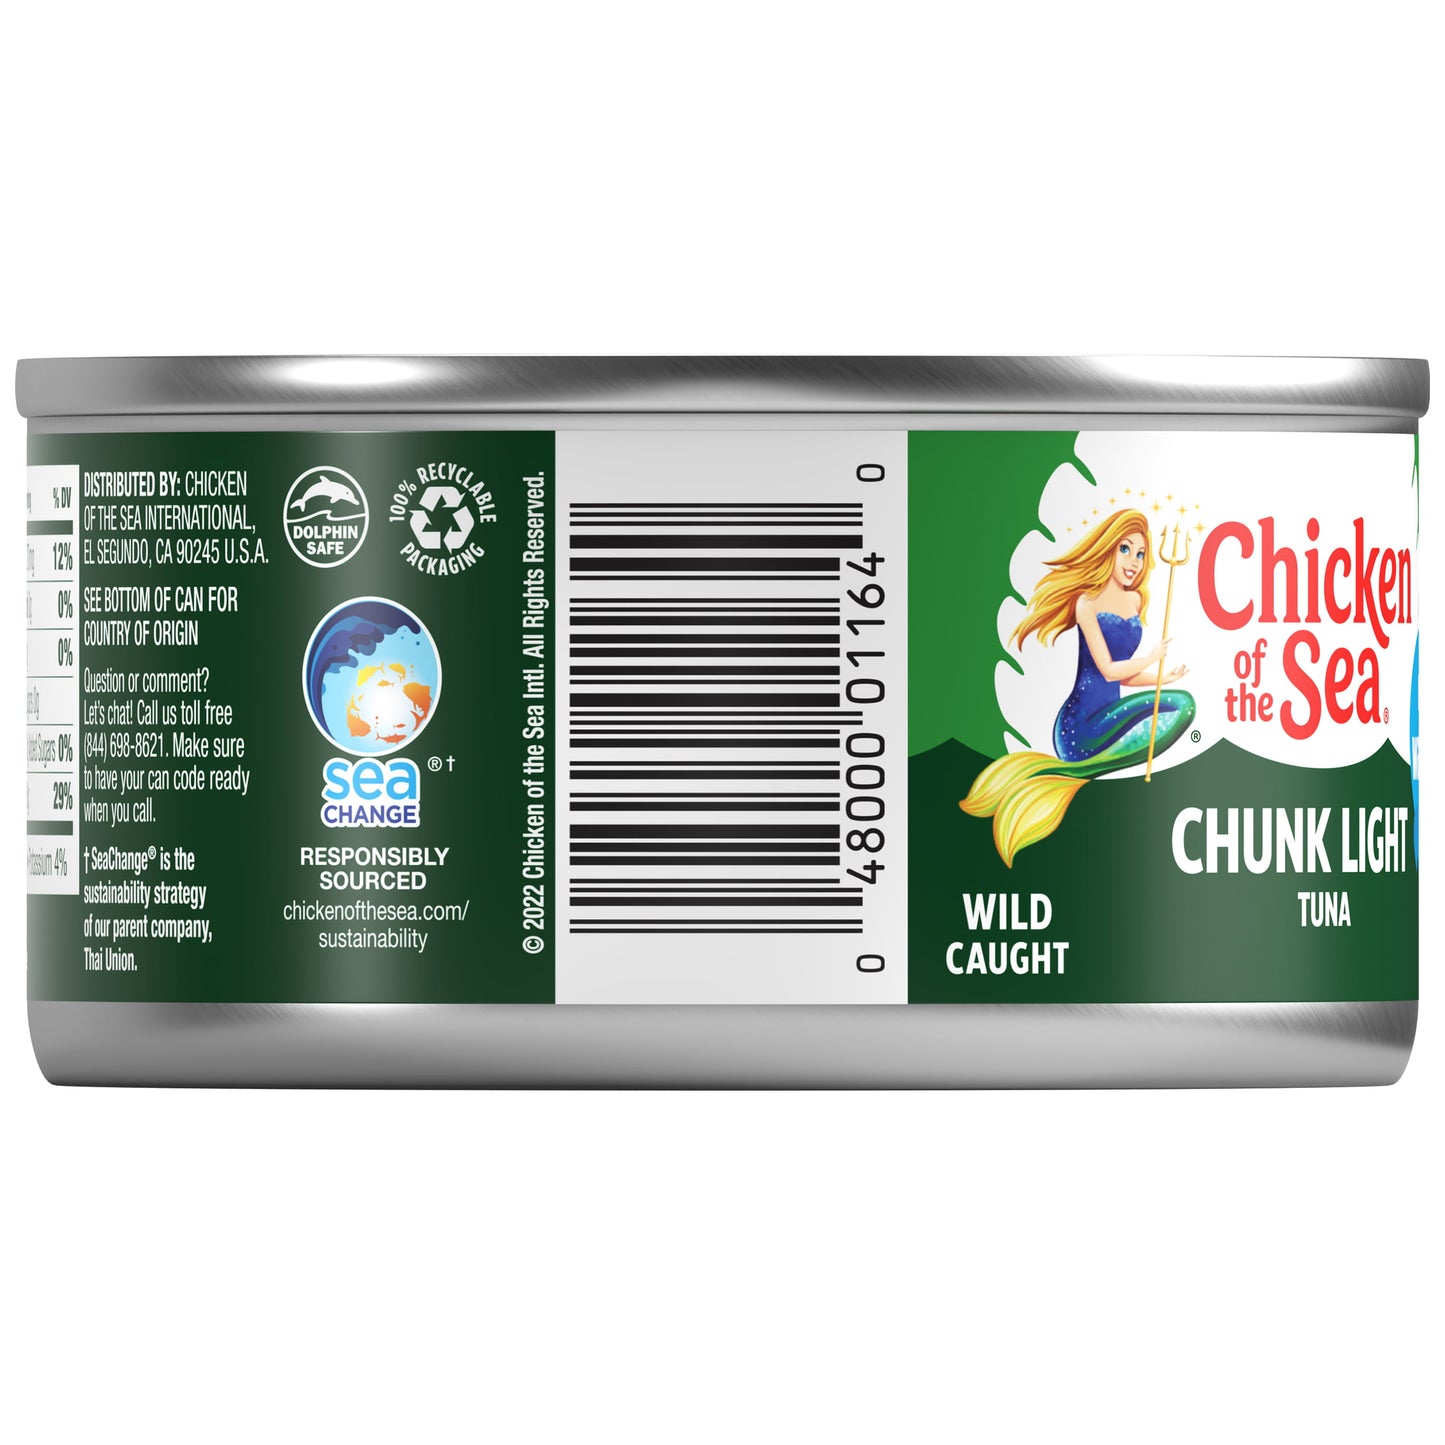 Chicken of the Sea Chunk Light Tuna in Water, 12 oz Can